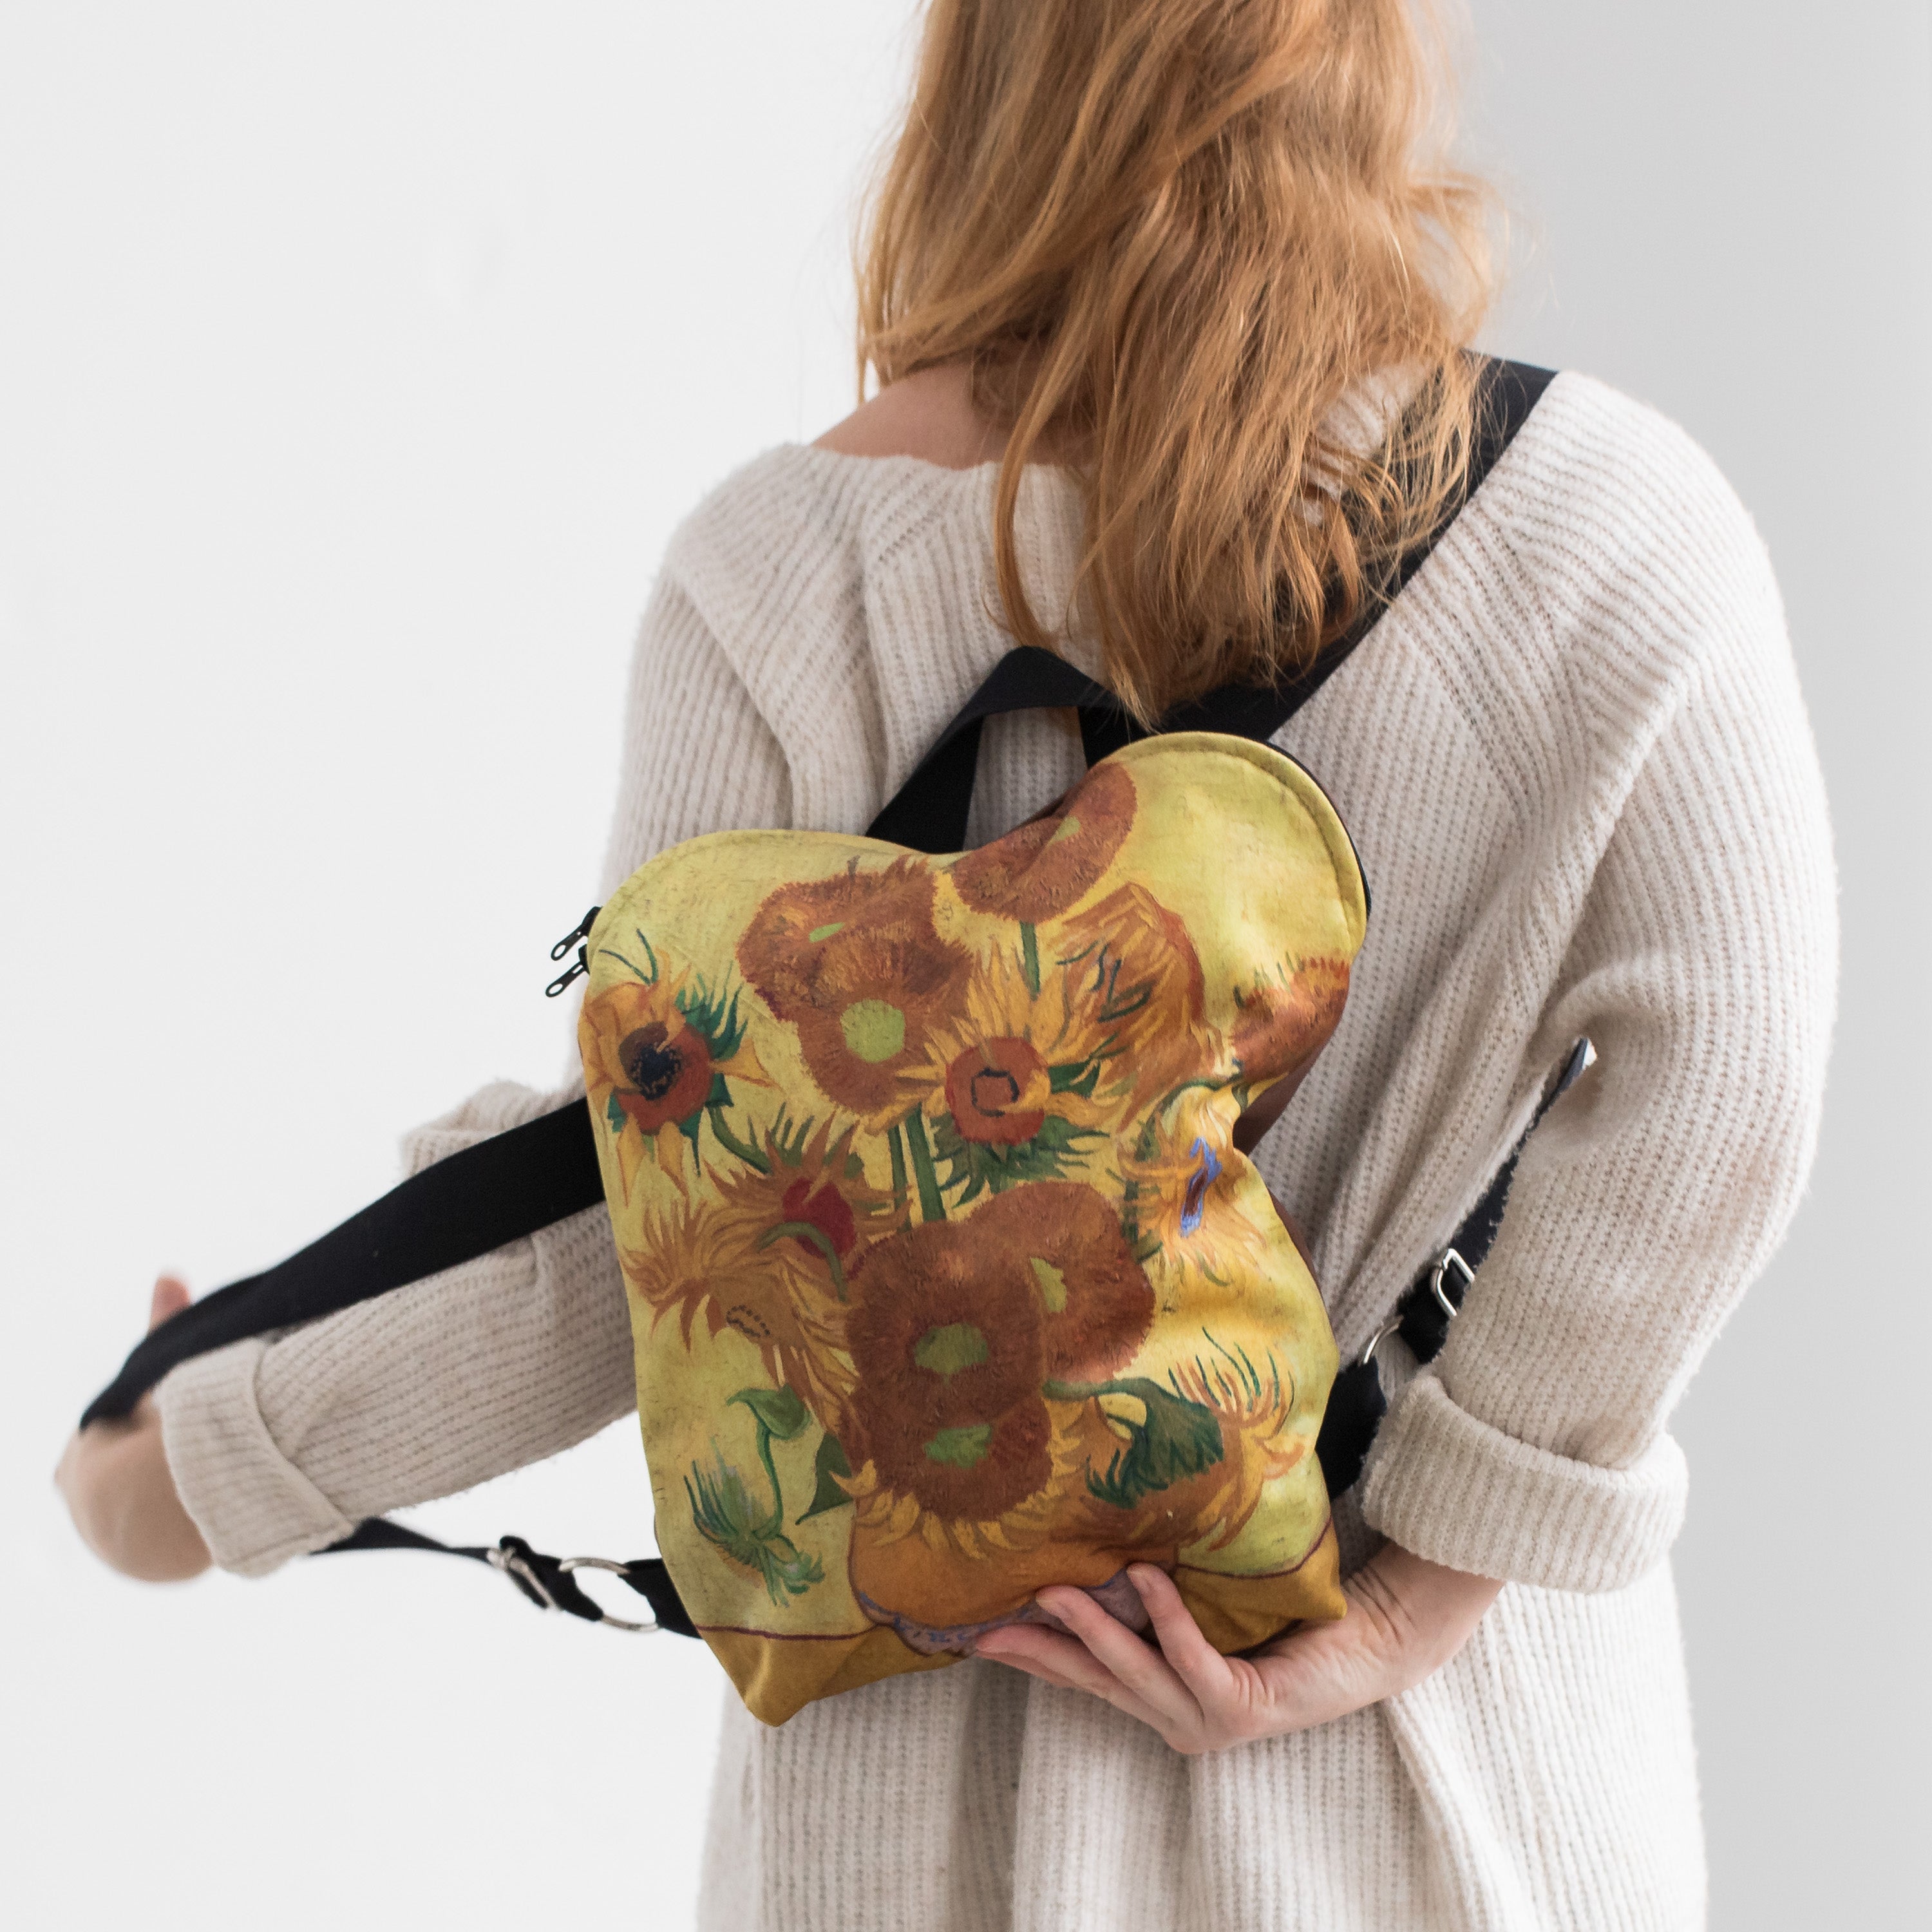 Backpack Vincent van Gogh "Sunflowers"